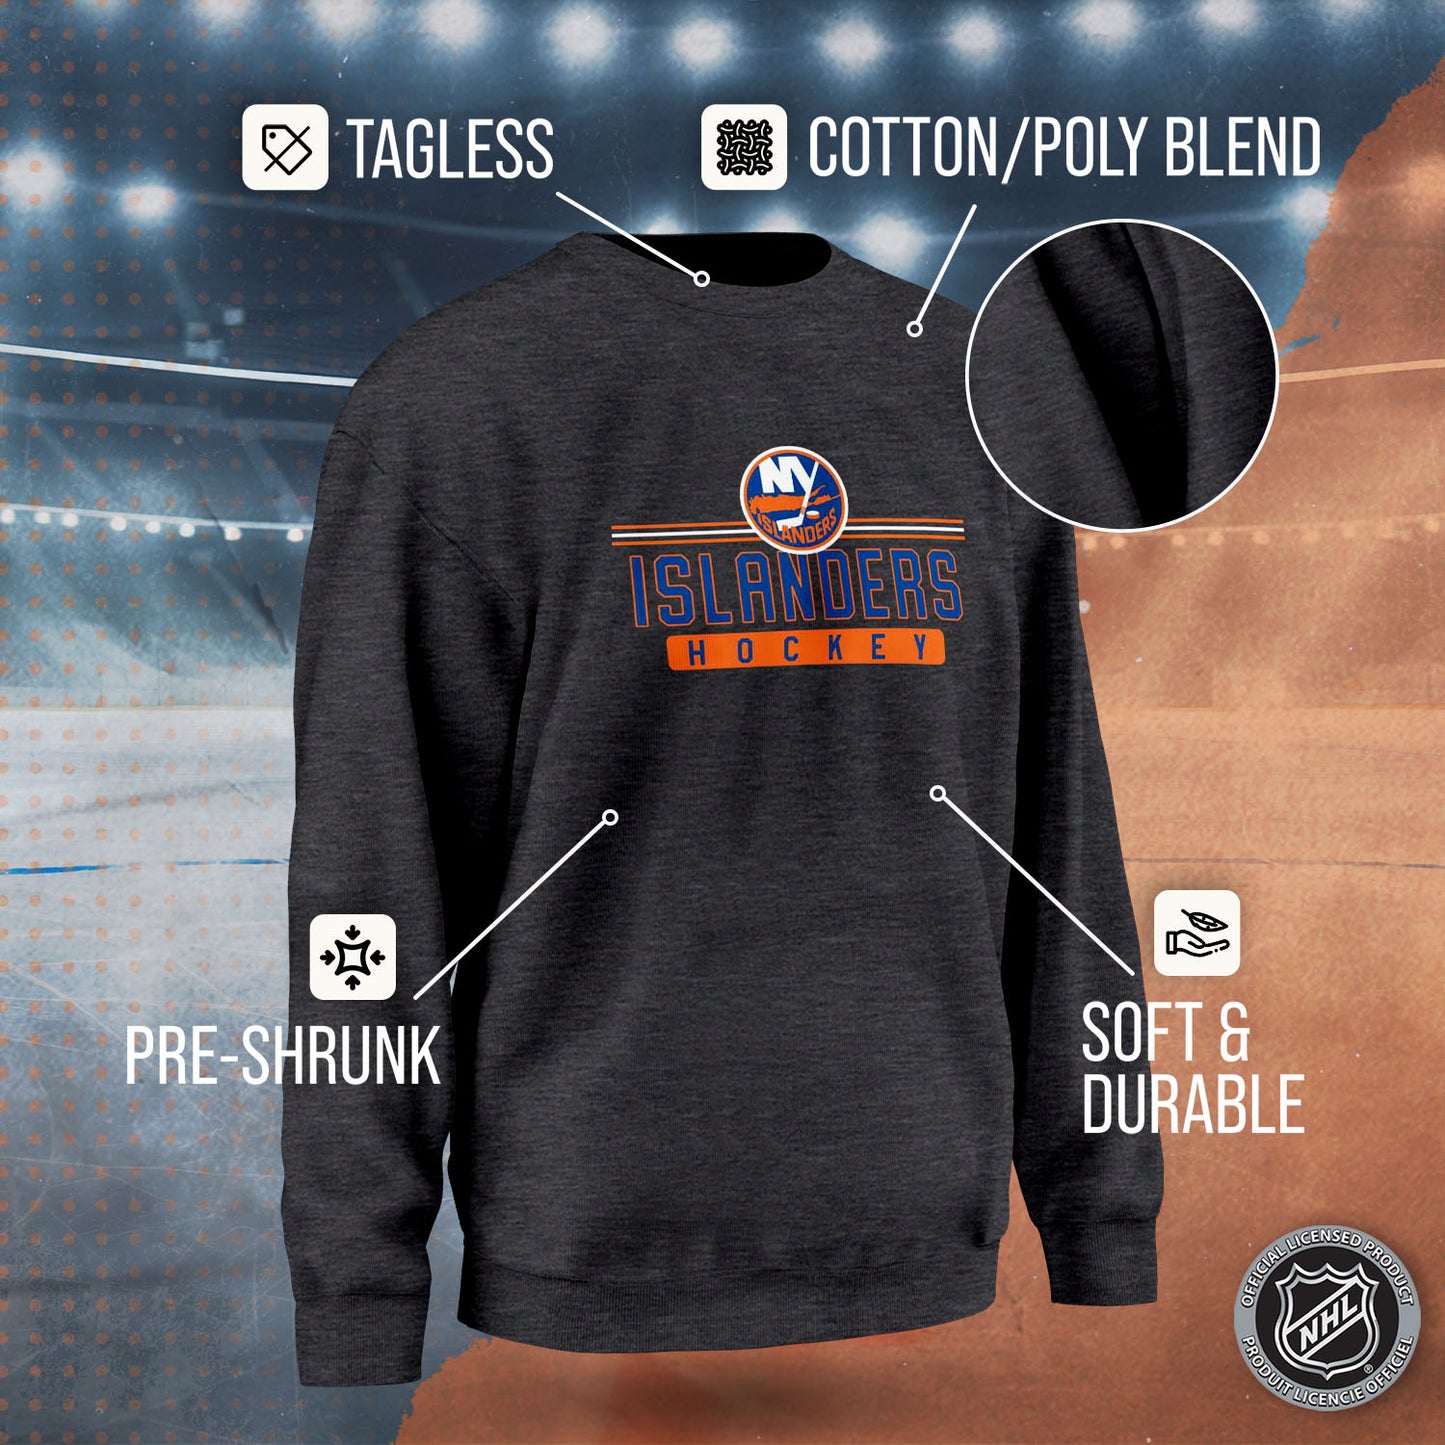 New York Islanders NHL Charcoal True Fan Crewneck Sweatshirt - Charcoal